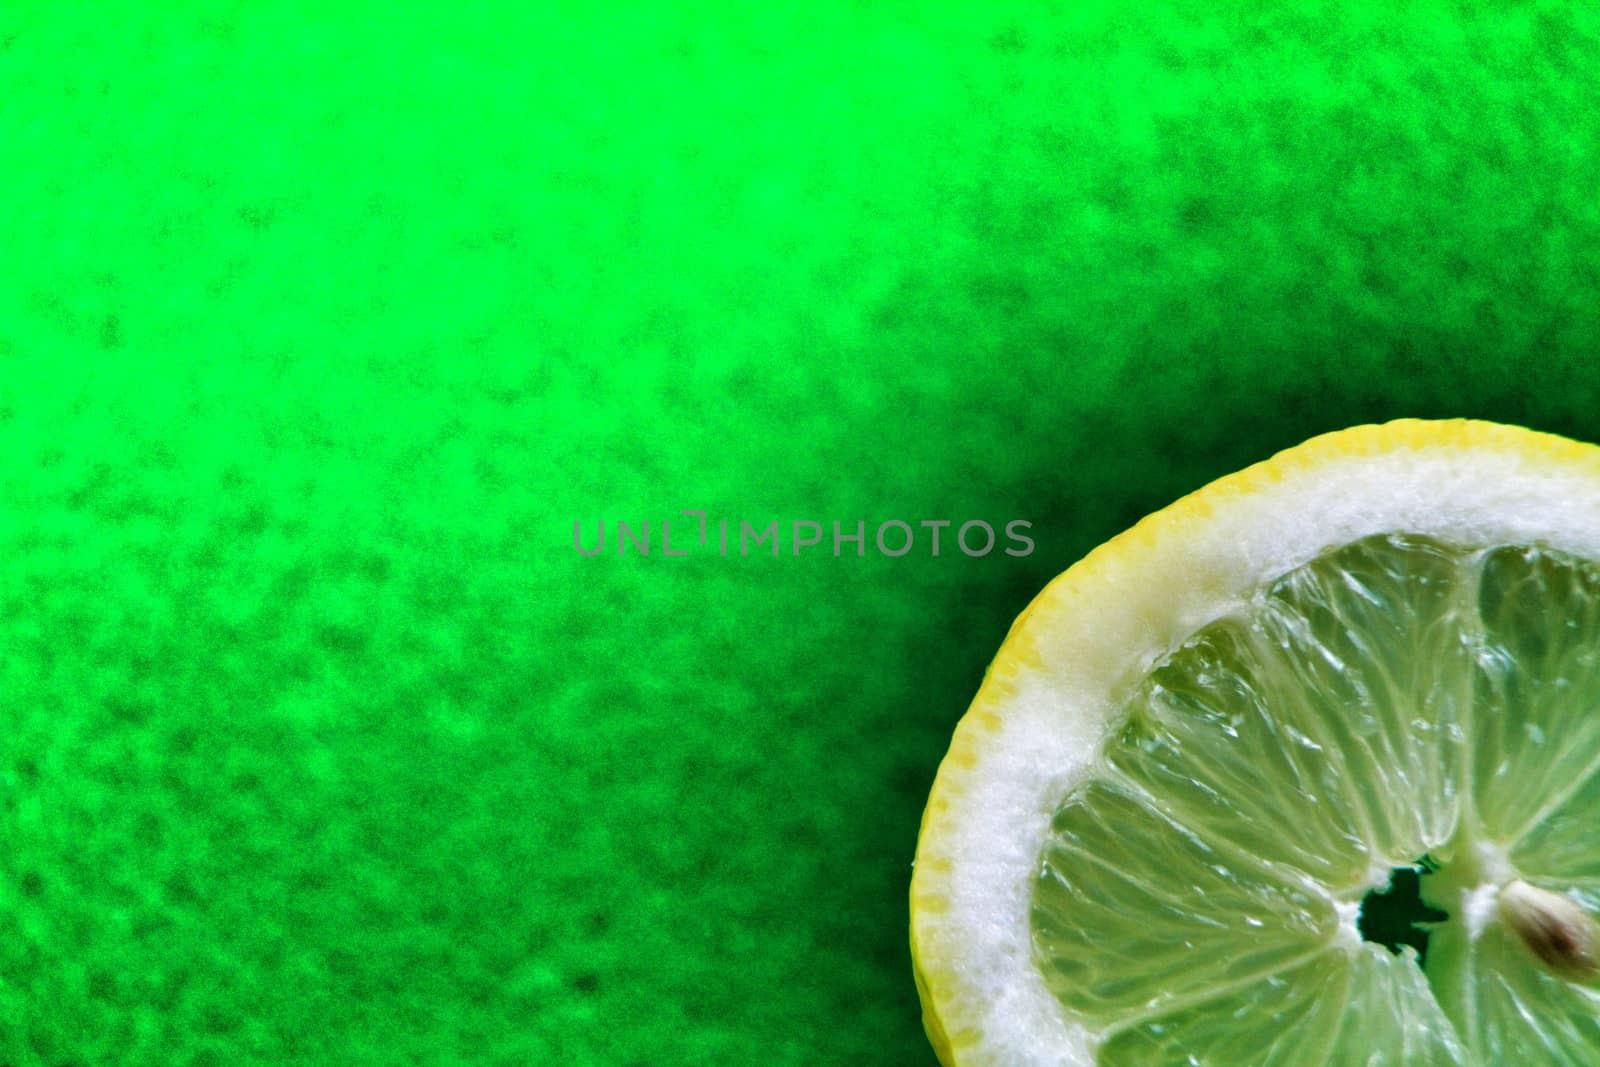 Slice of lemon on colorful green background